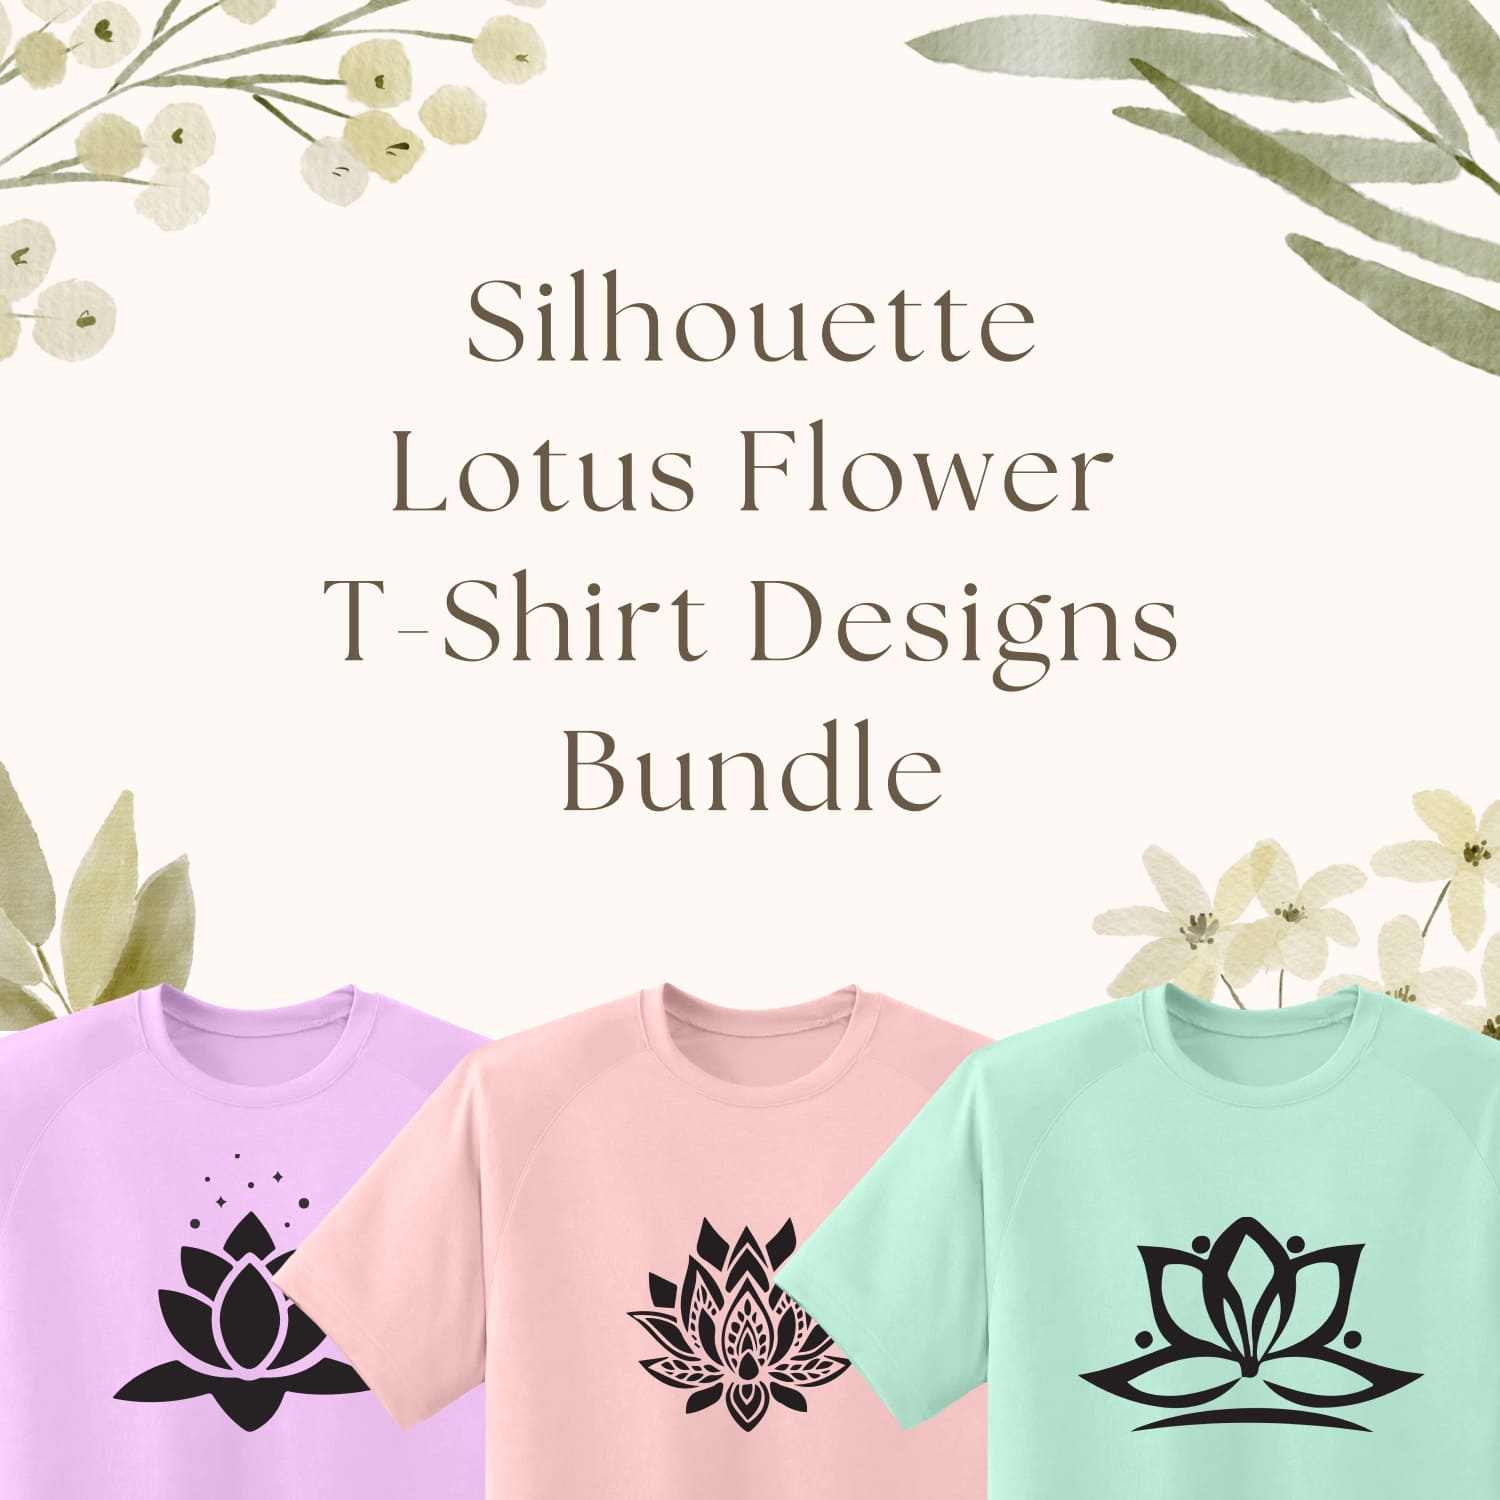 Silhouette Lotus Flower T-shirt Designs Bundle.